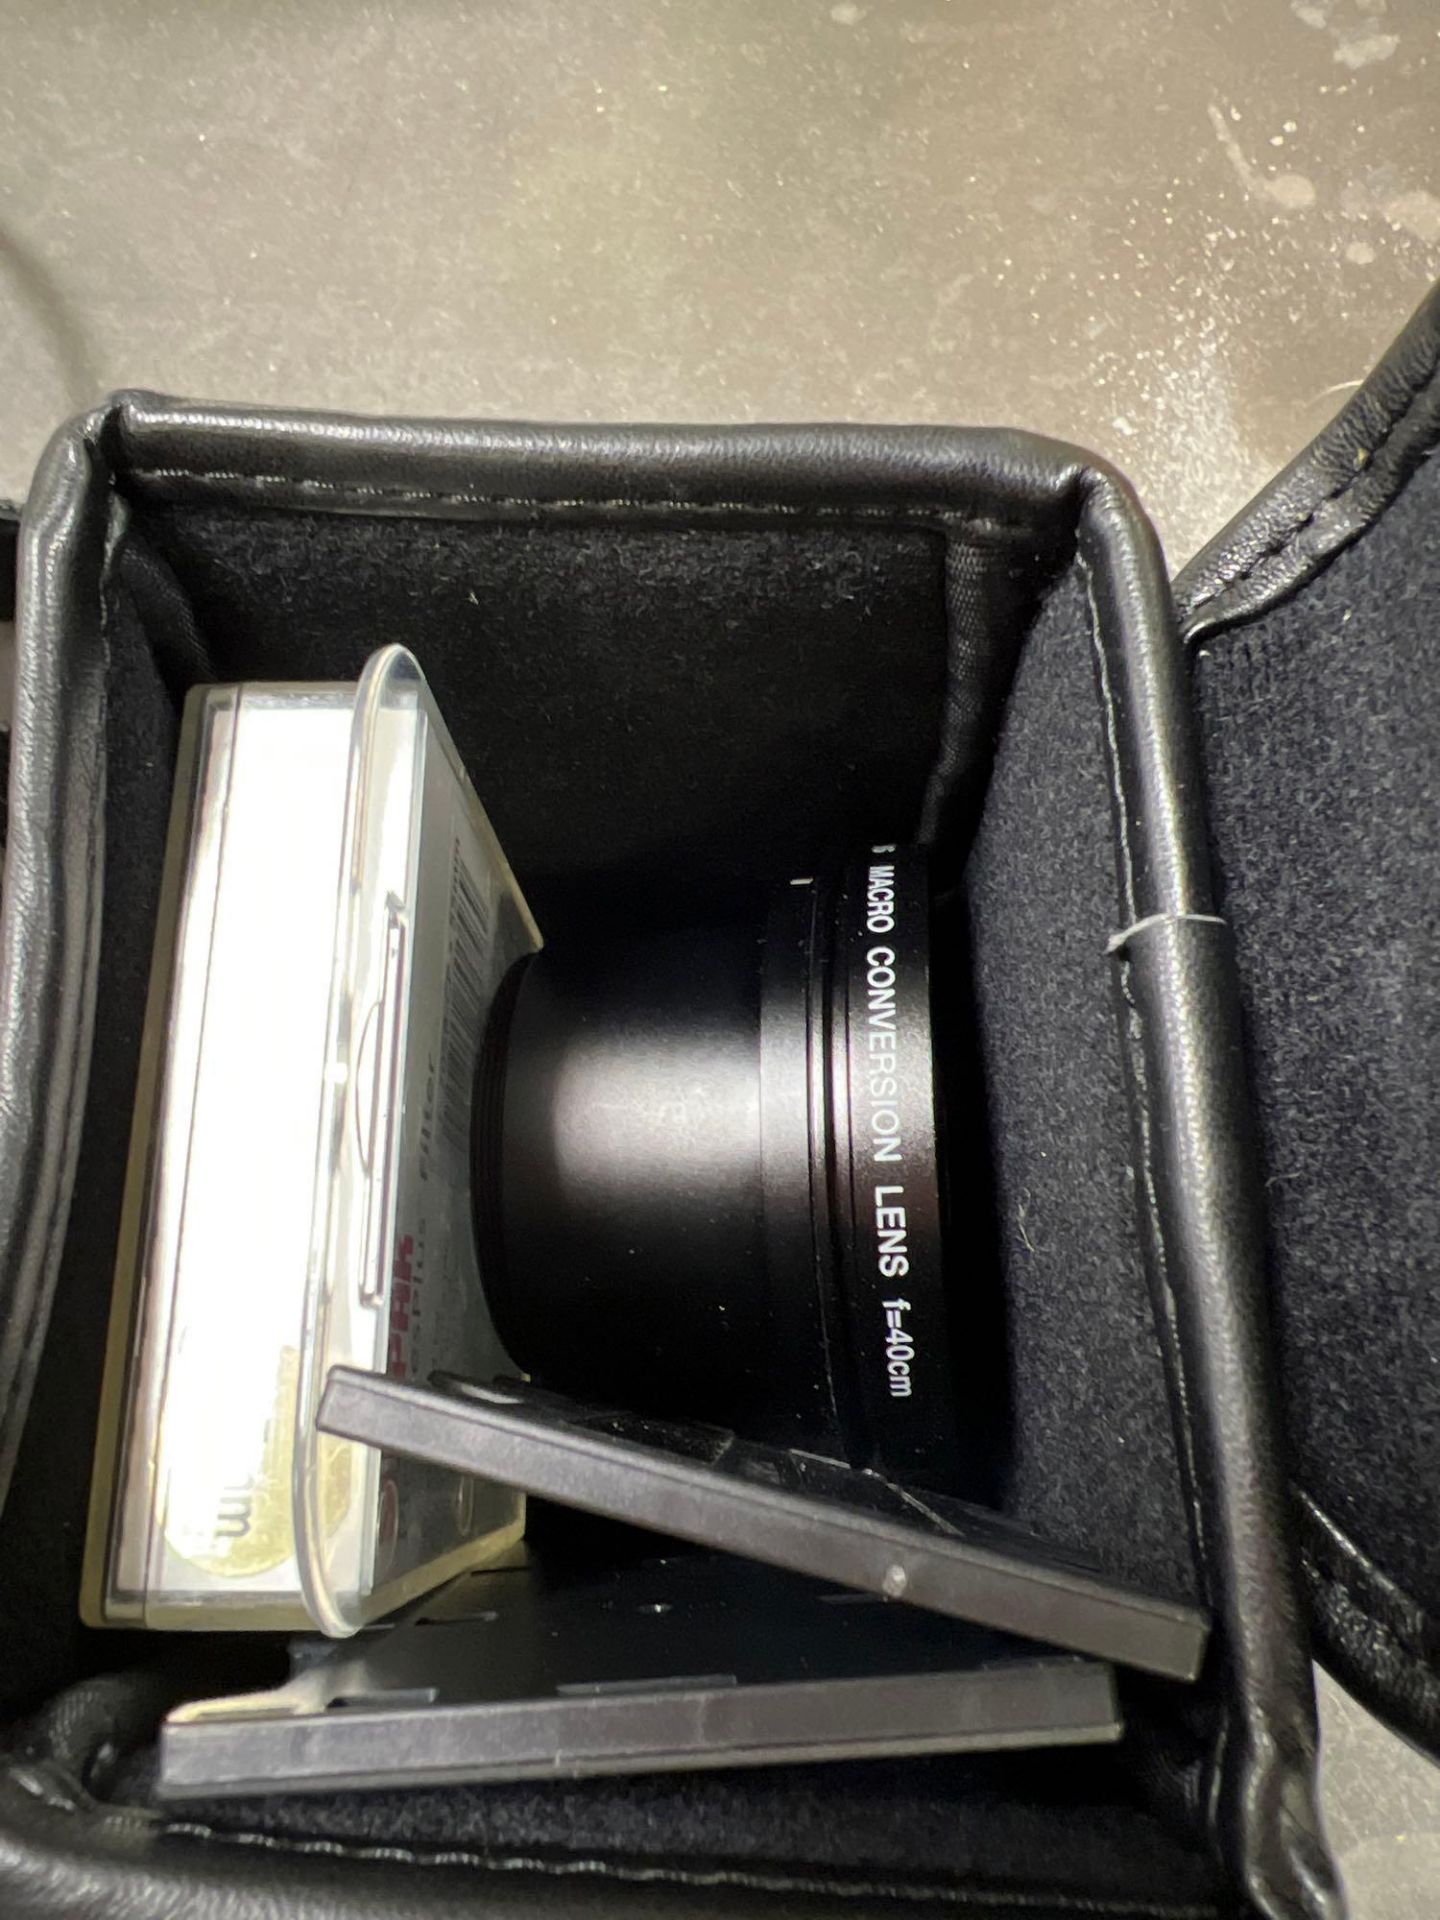 Digital Camera C-750 Zoom w/ Micro Conversion Lens - Image 2 of 3